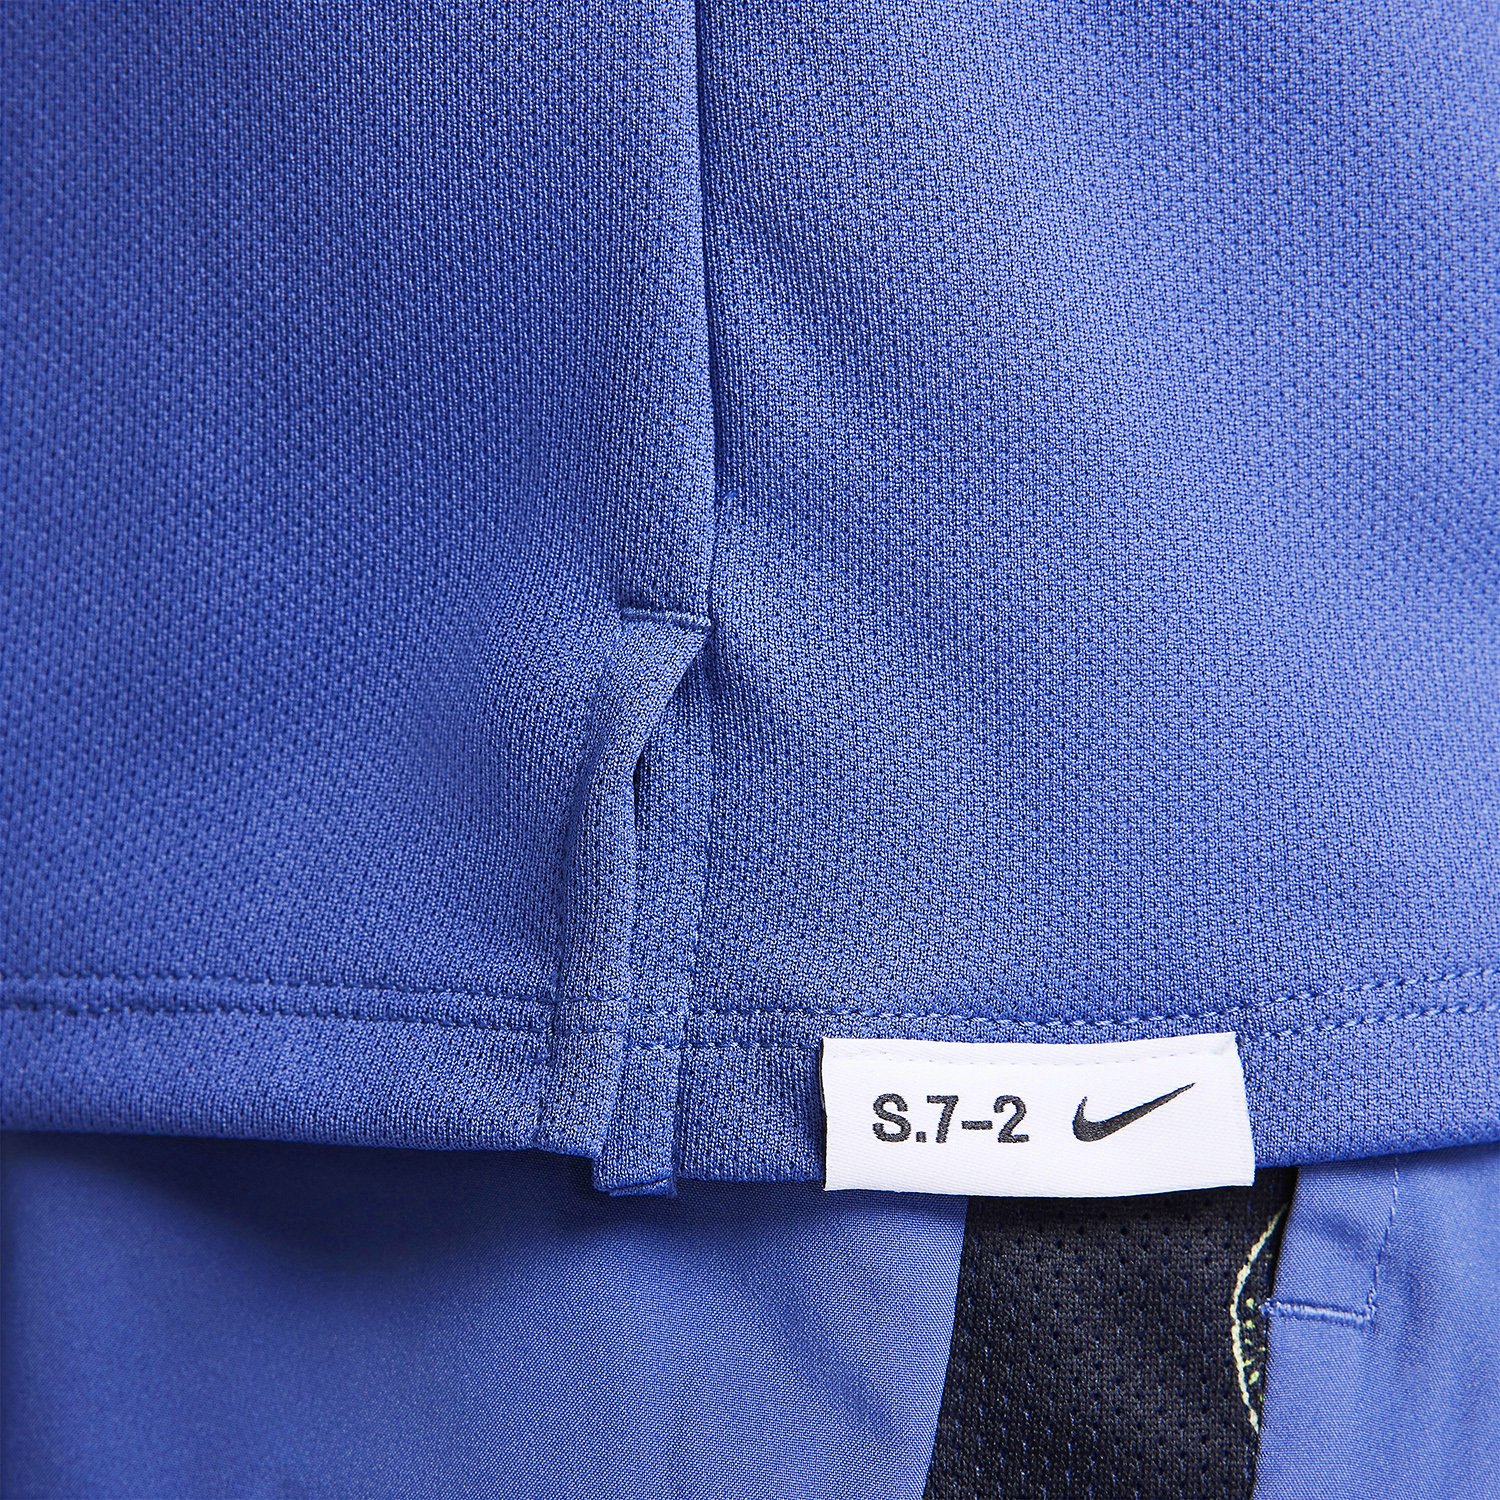 Nike Dri-FIT UV Miler Studio 72 T-Shirt - Diffused Blue/Lime Blast